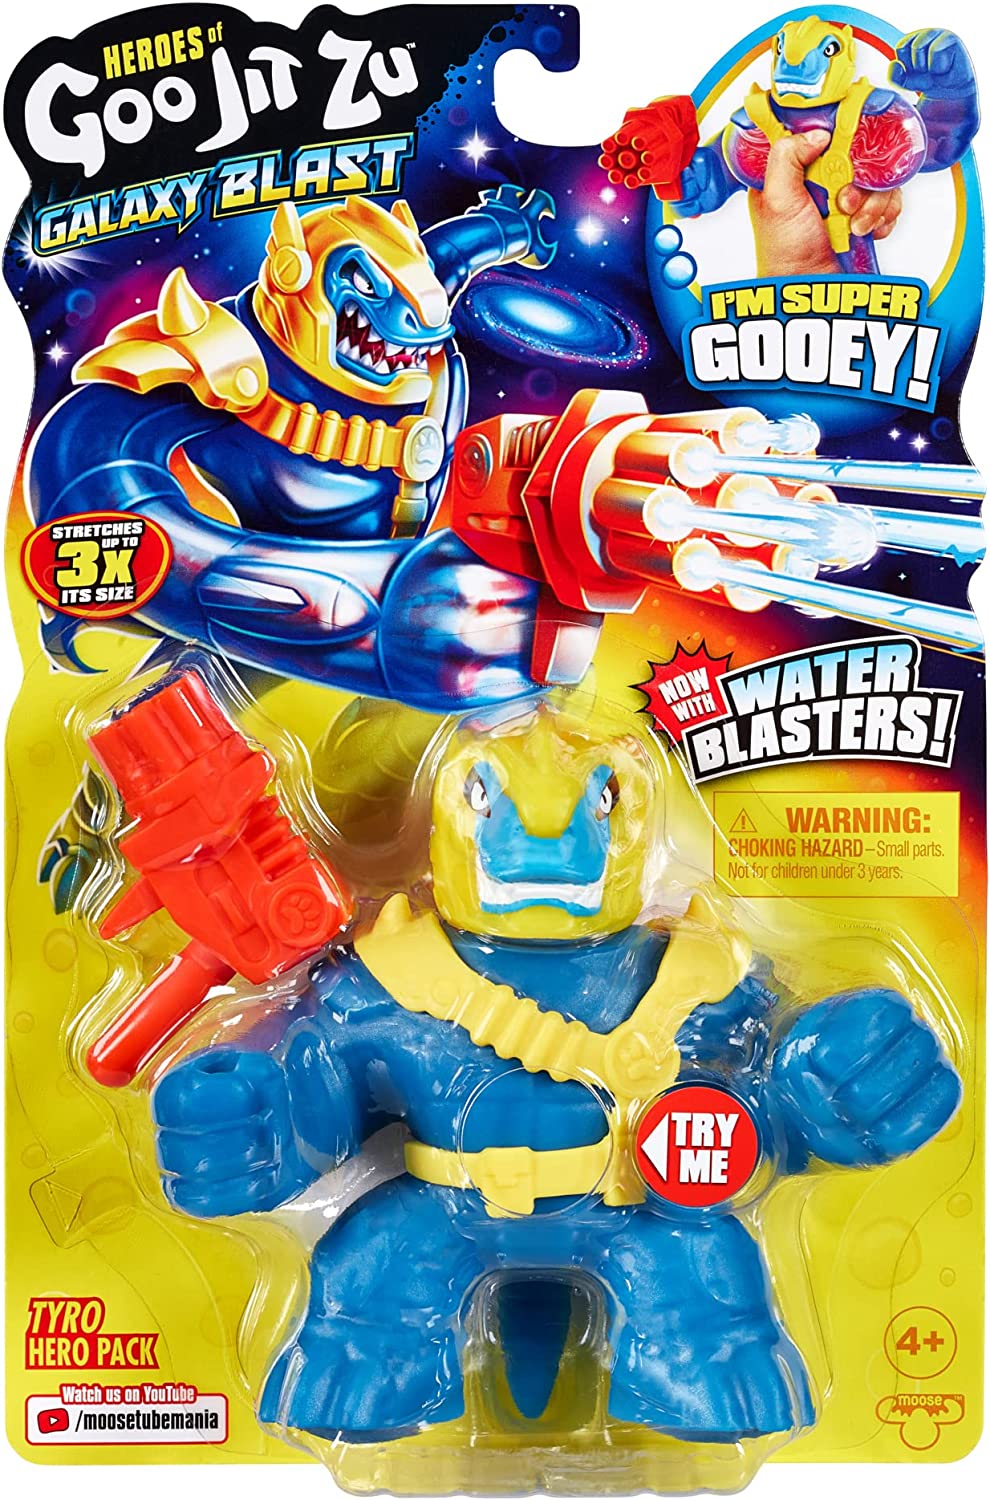 Heroes of Goo Jit Zu Galaxy Blast Hero Pack - Super Gooey Tyro with an All New Water Blaster